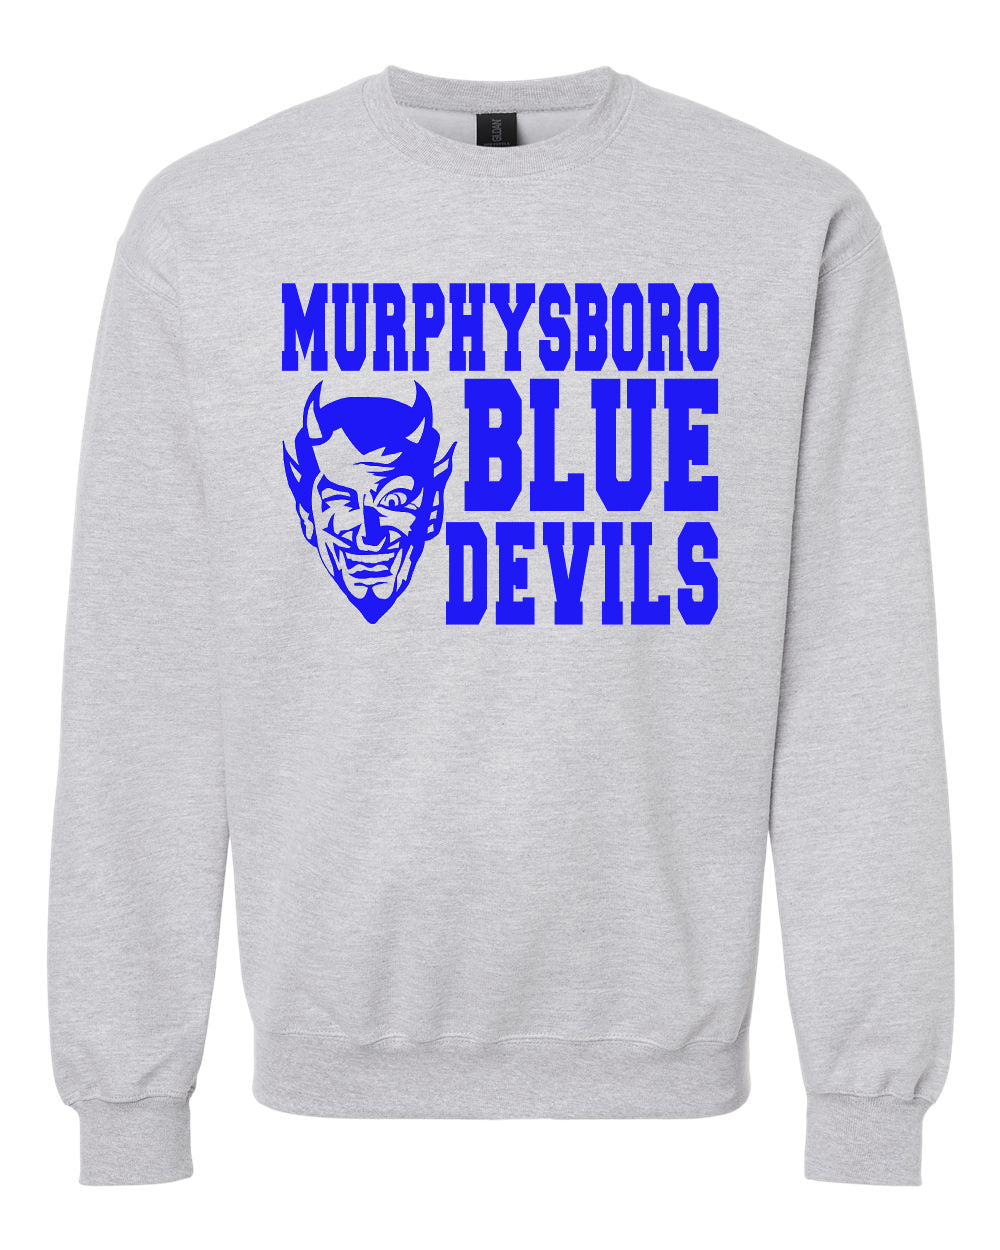 Murphysboro Blue Devils on Gray